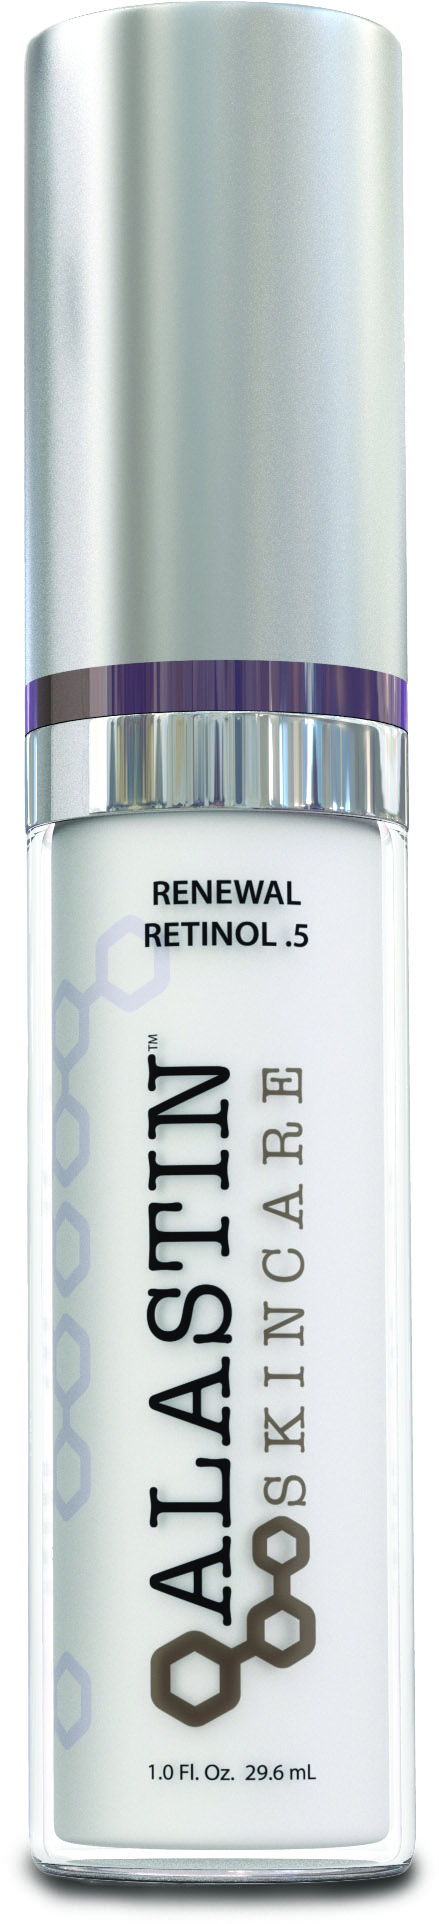 renewal retinol .5